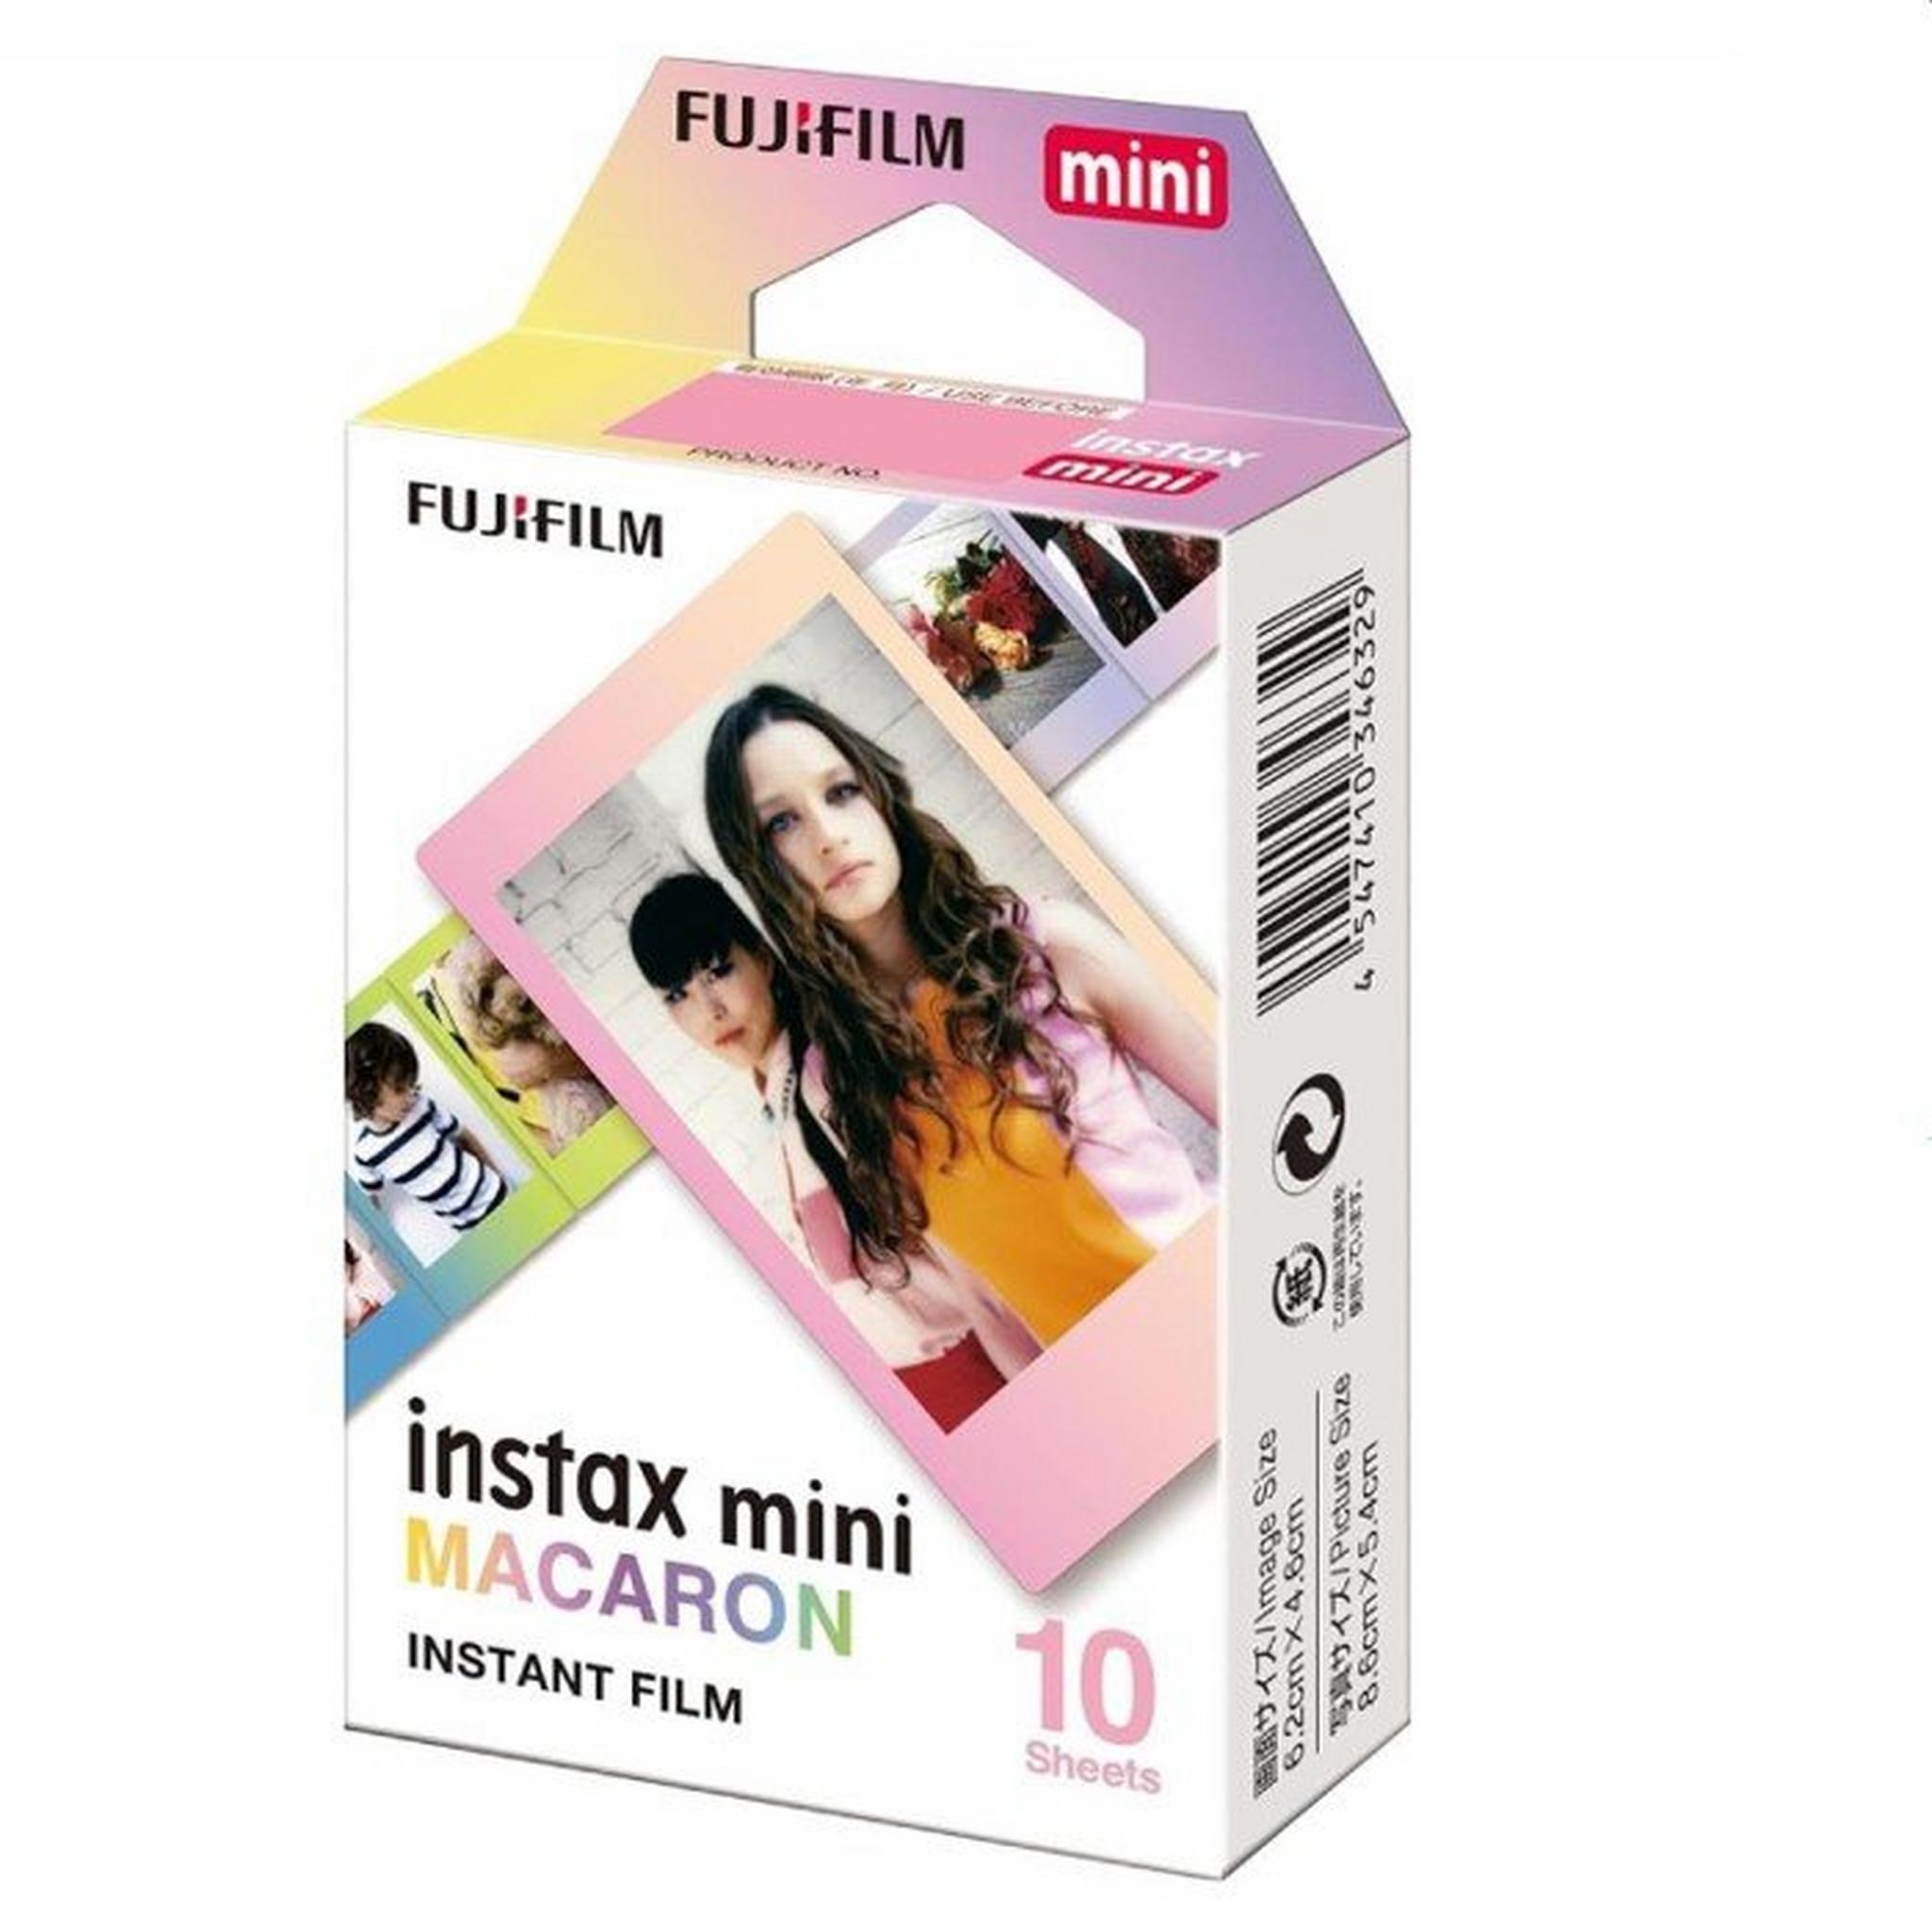 Fujifilm Instax Mini Macaron Film, 10 Sheets, INSTX MINI - MM